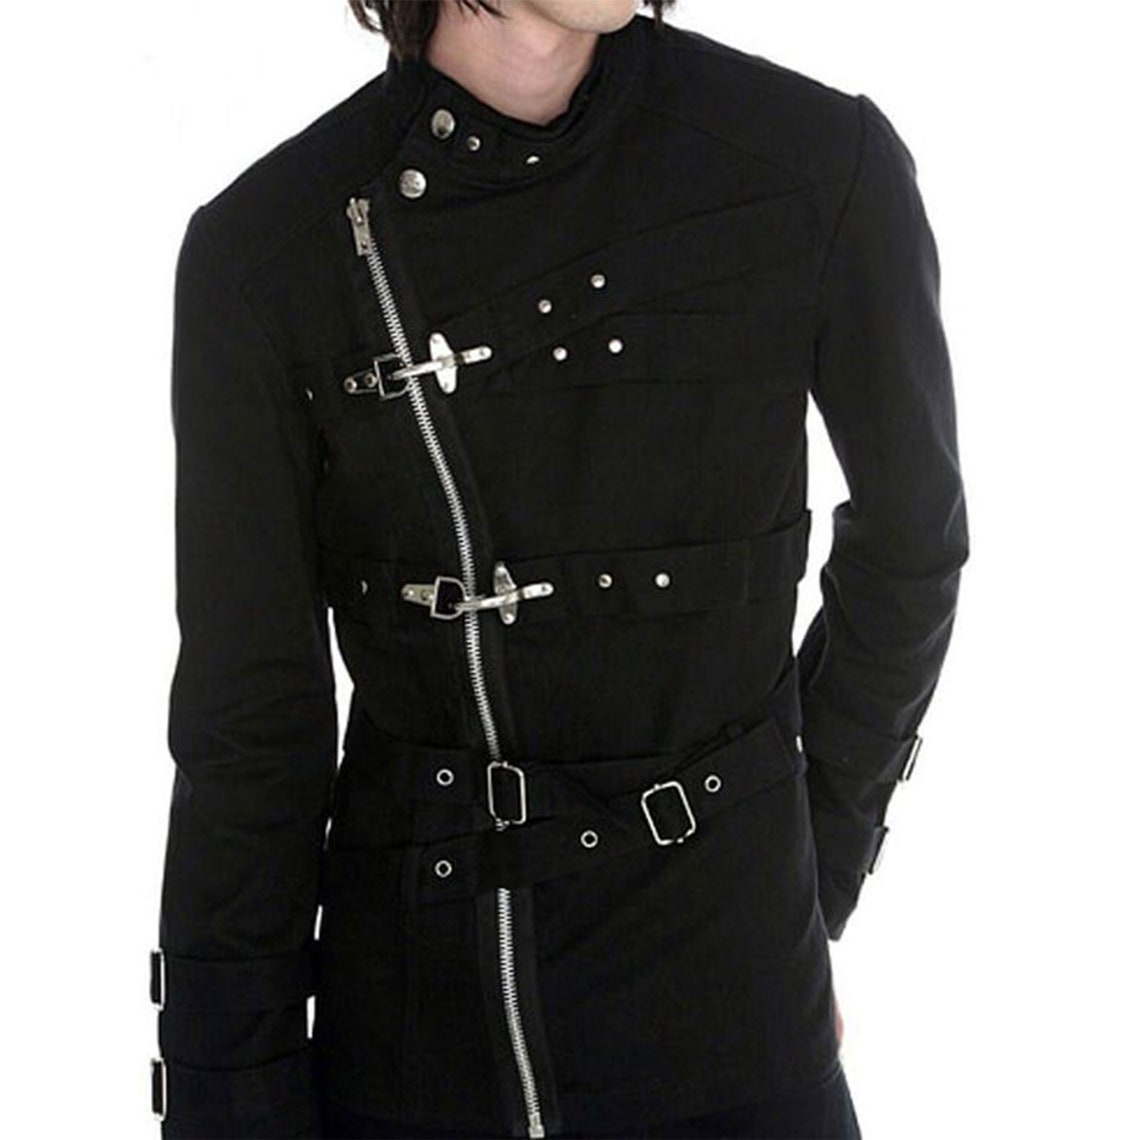 Military Drummer Jacket Black Parade Jacket Goth Punk Adam Ant - Etsy